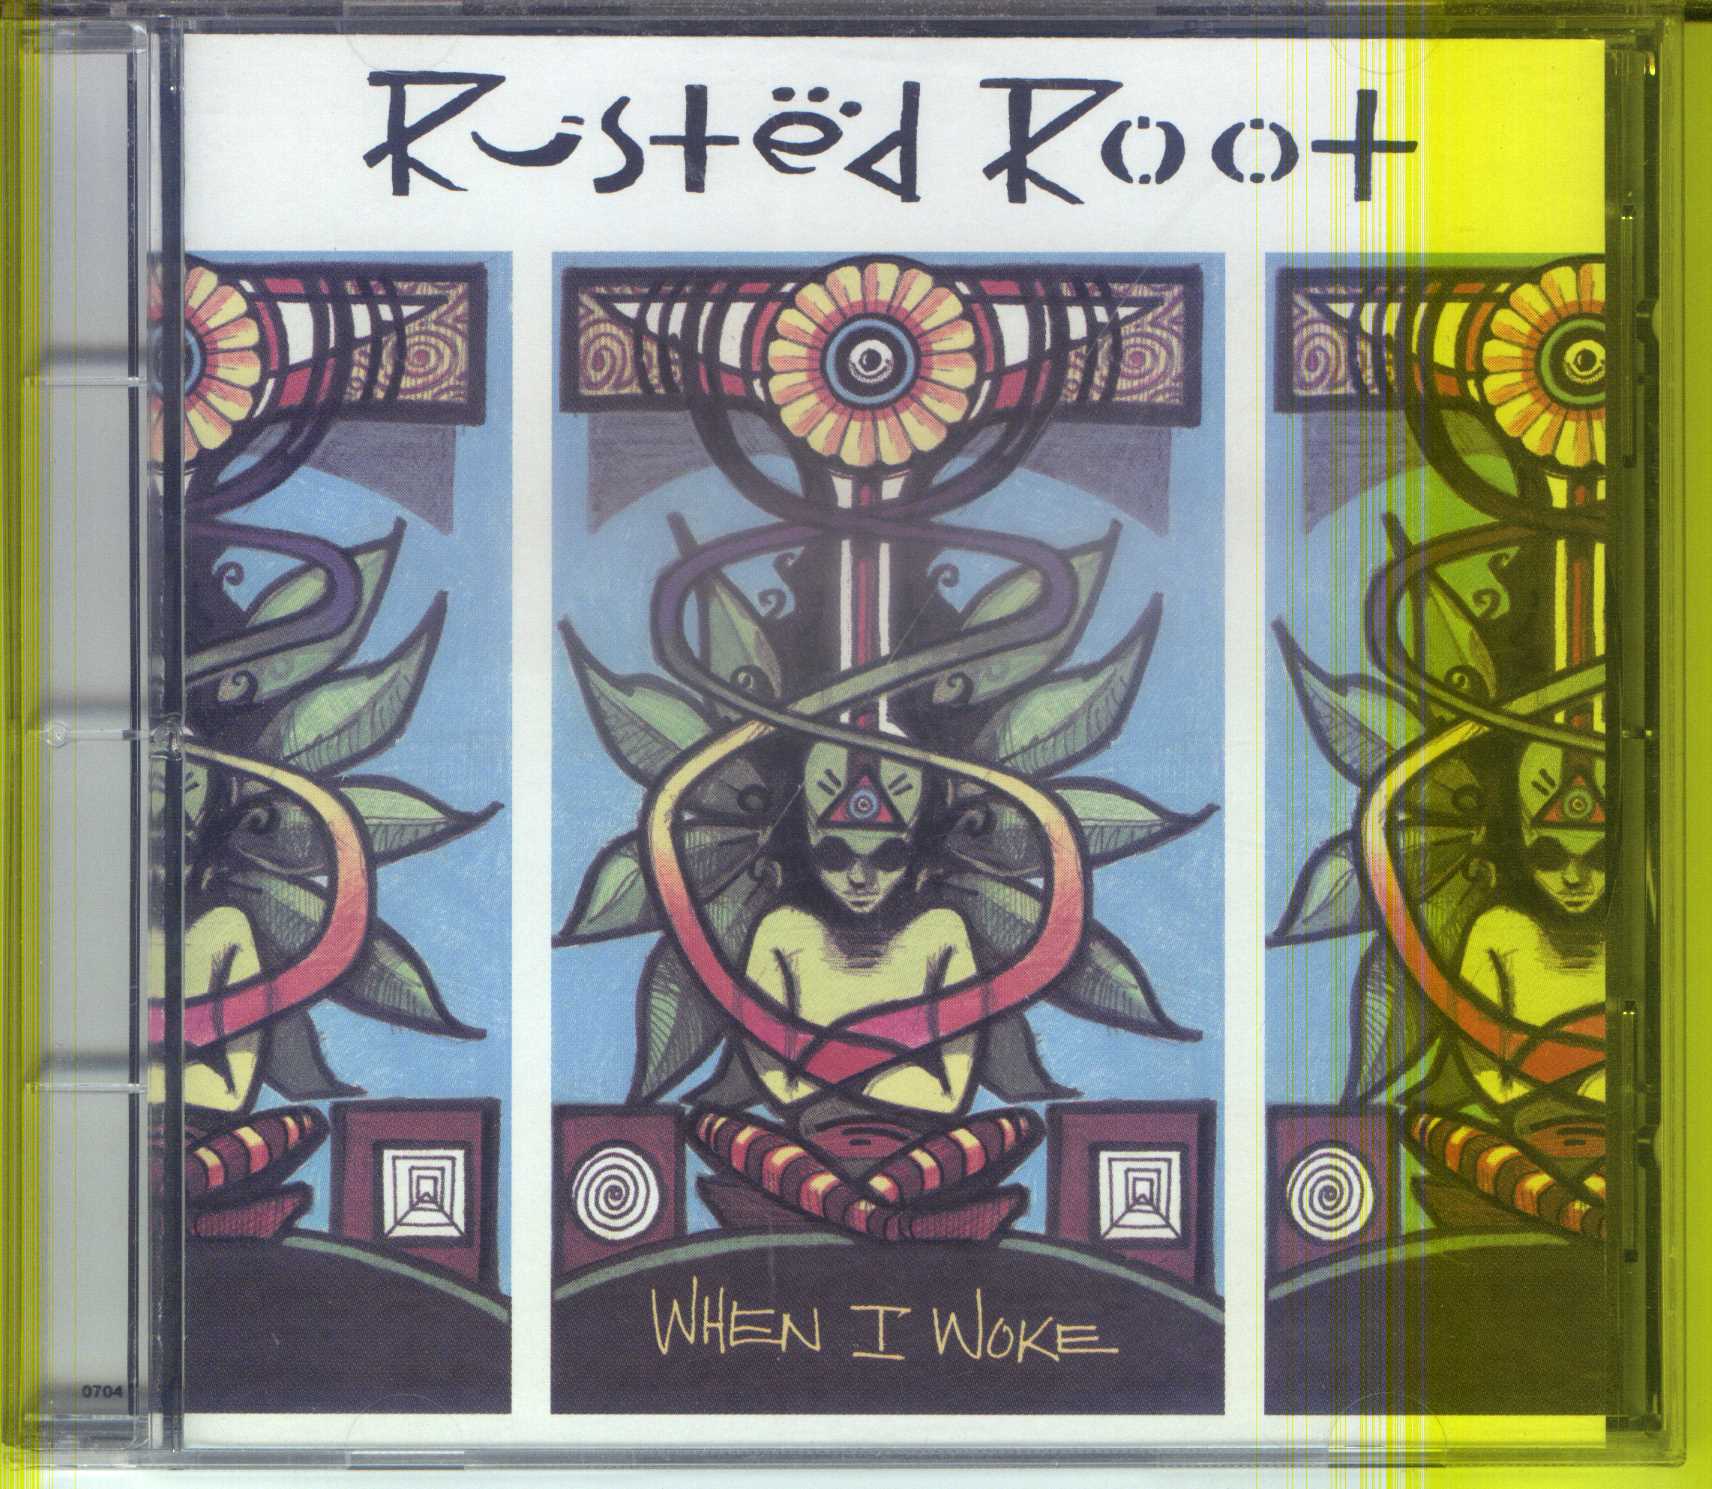 When I Woke by Rusted Root (CD, Mar-2003, Mercury) NEW SEALED